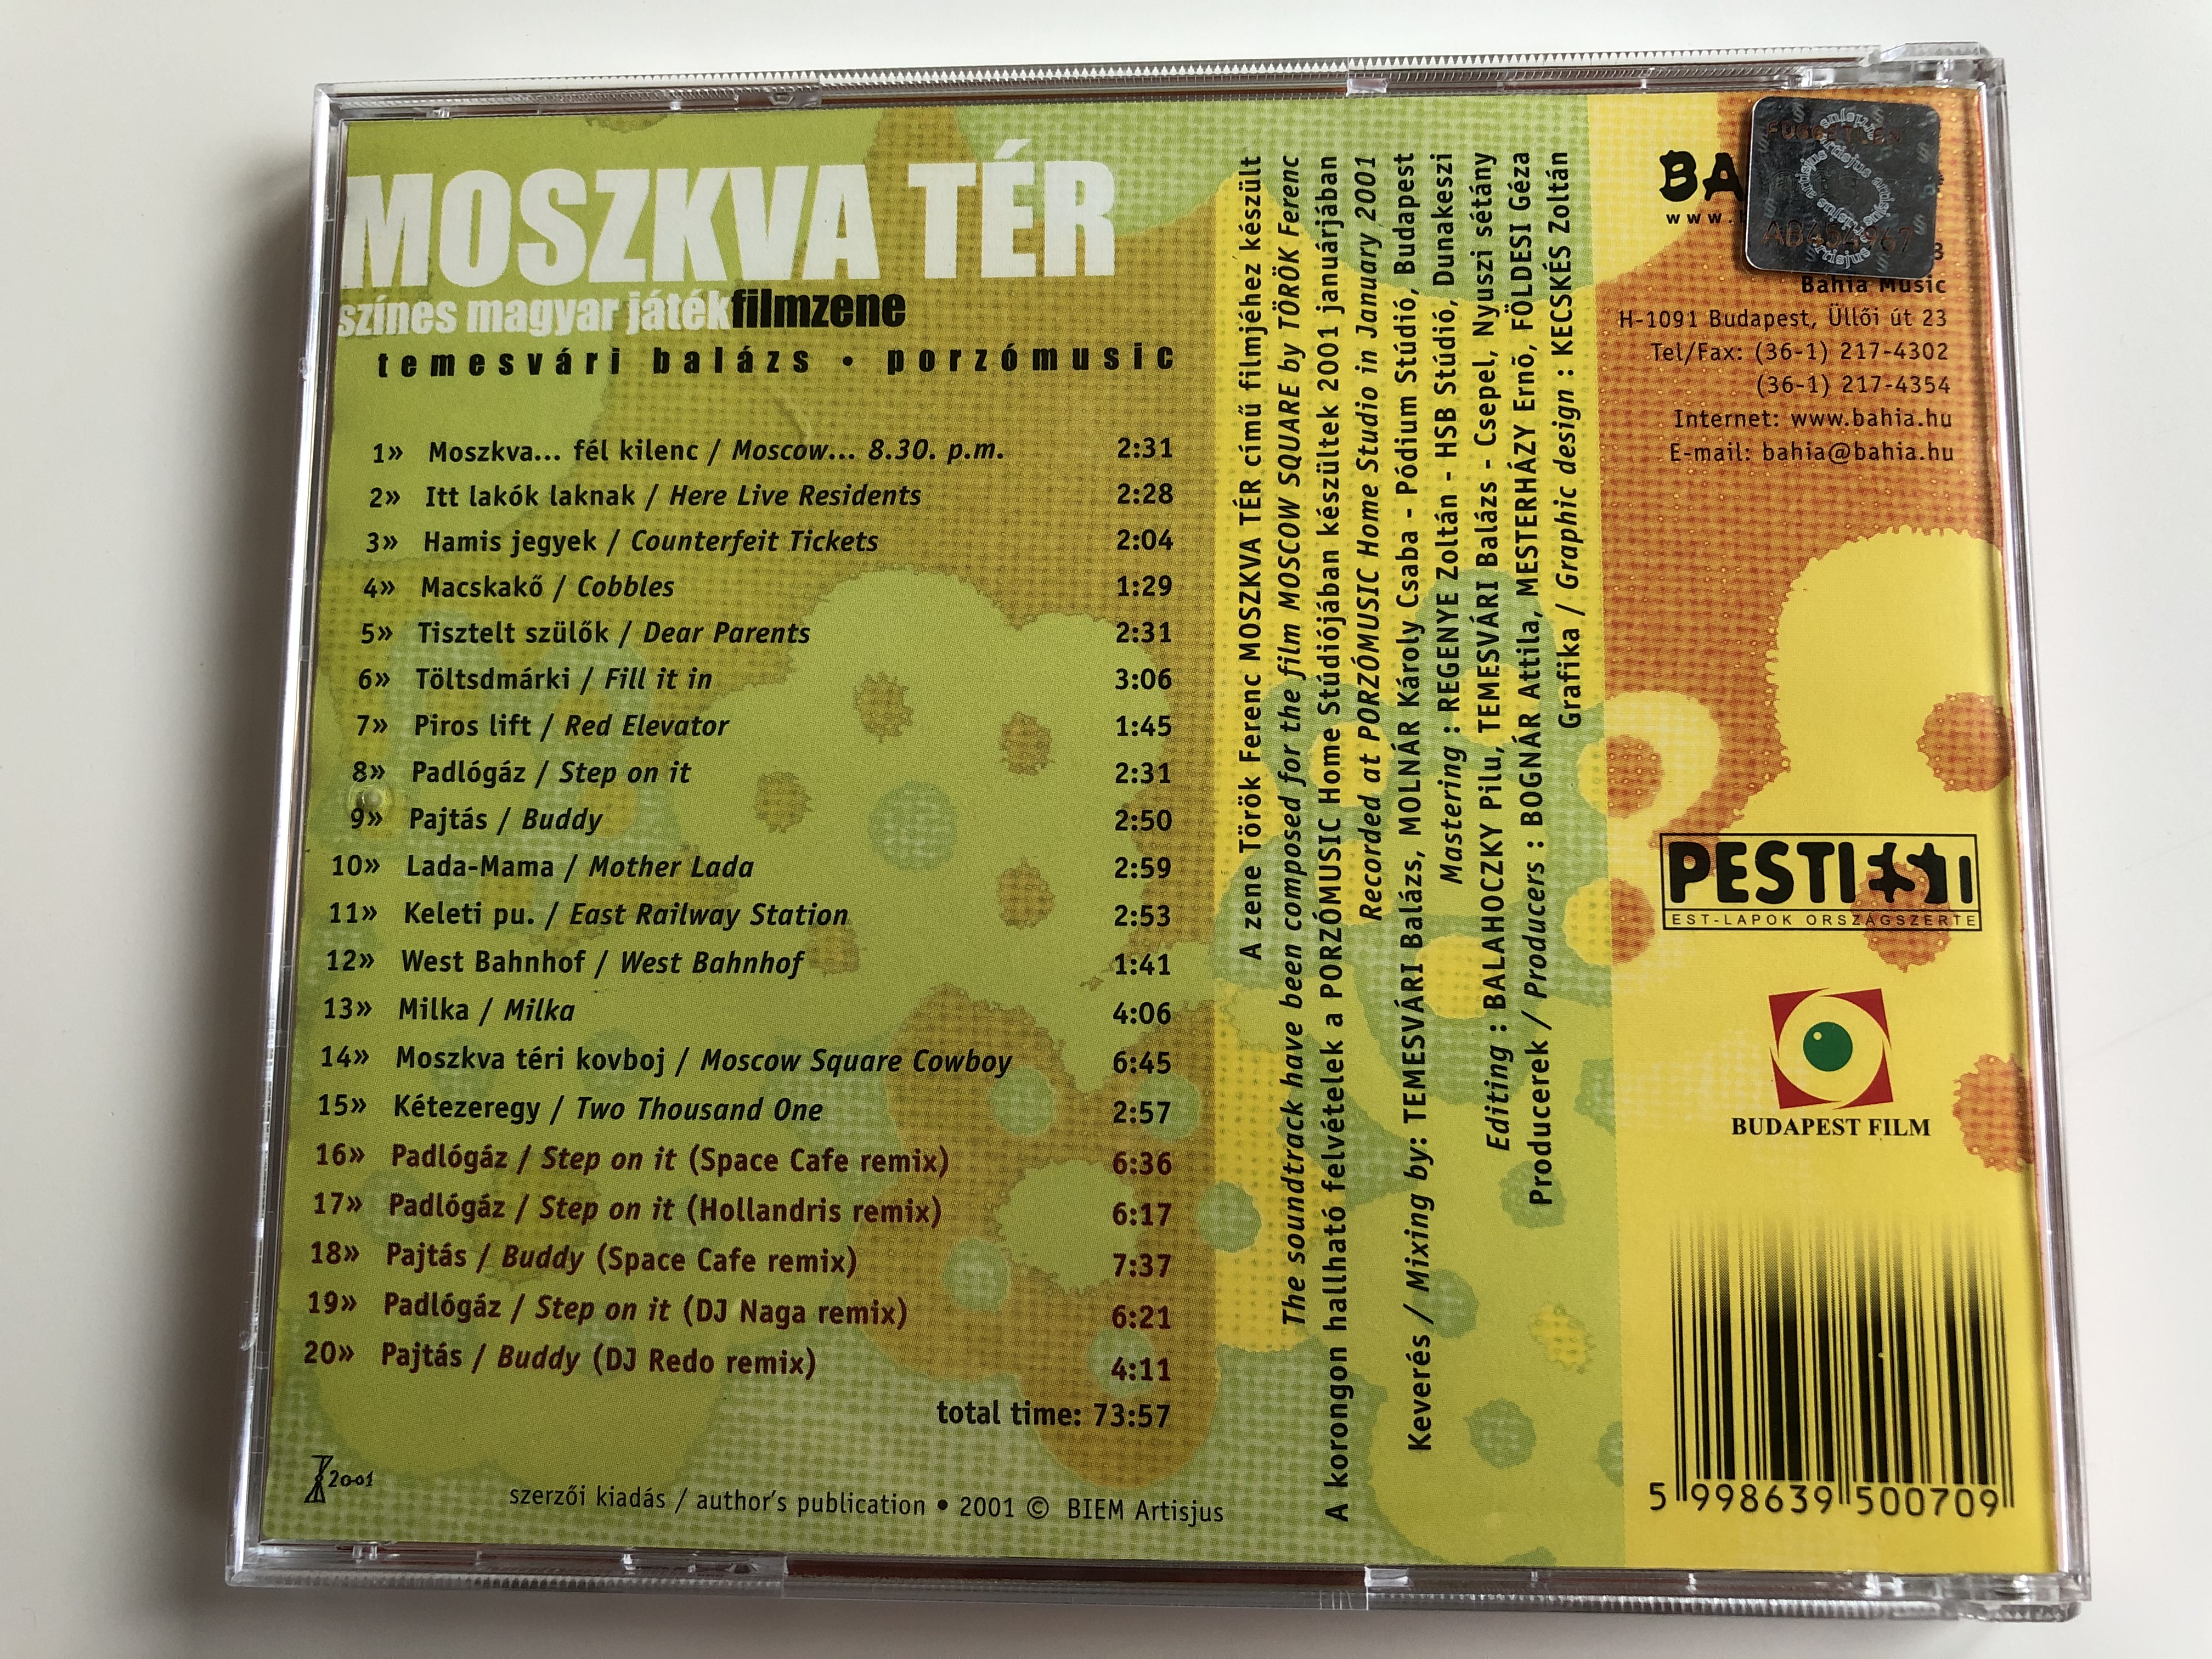 moszkva-ter-szines-magyar-jatek-filmzene-temesv-ri-bal-zs-bahia-music-audio-cd-2001-cdb-078-7-.jpg